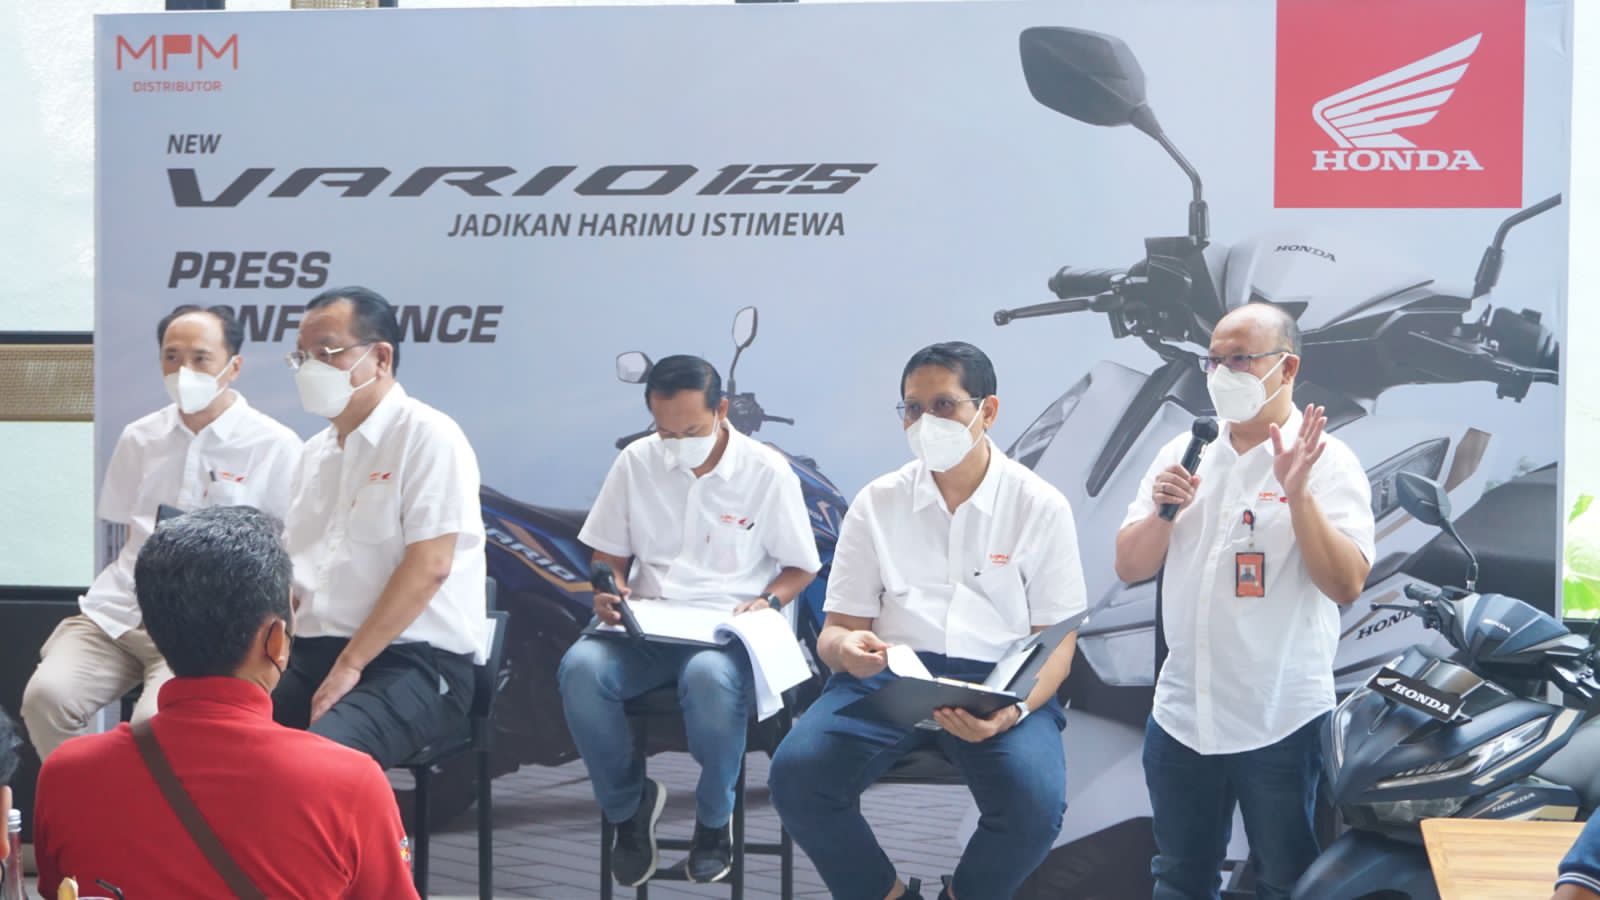 Harga New Honda Vario125 tahun 2022 area Kota Surabaya gans...